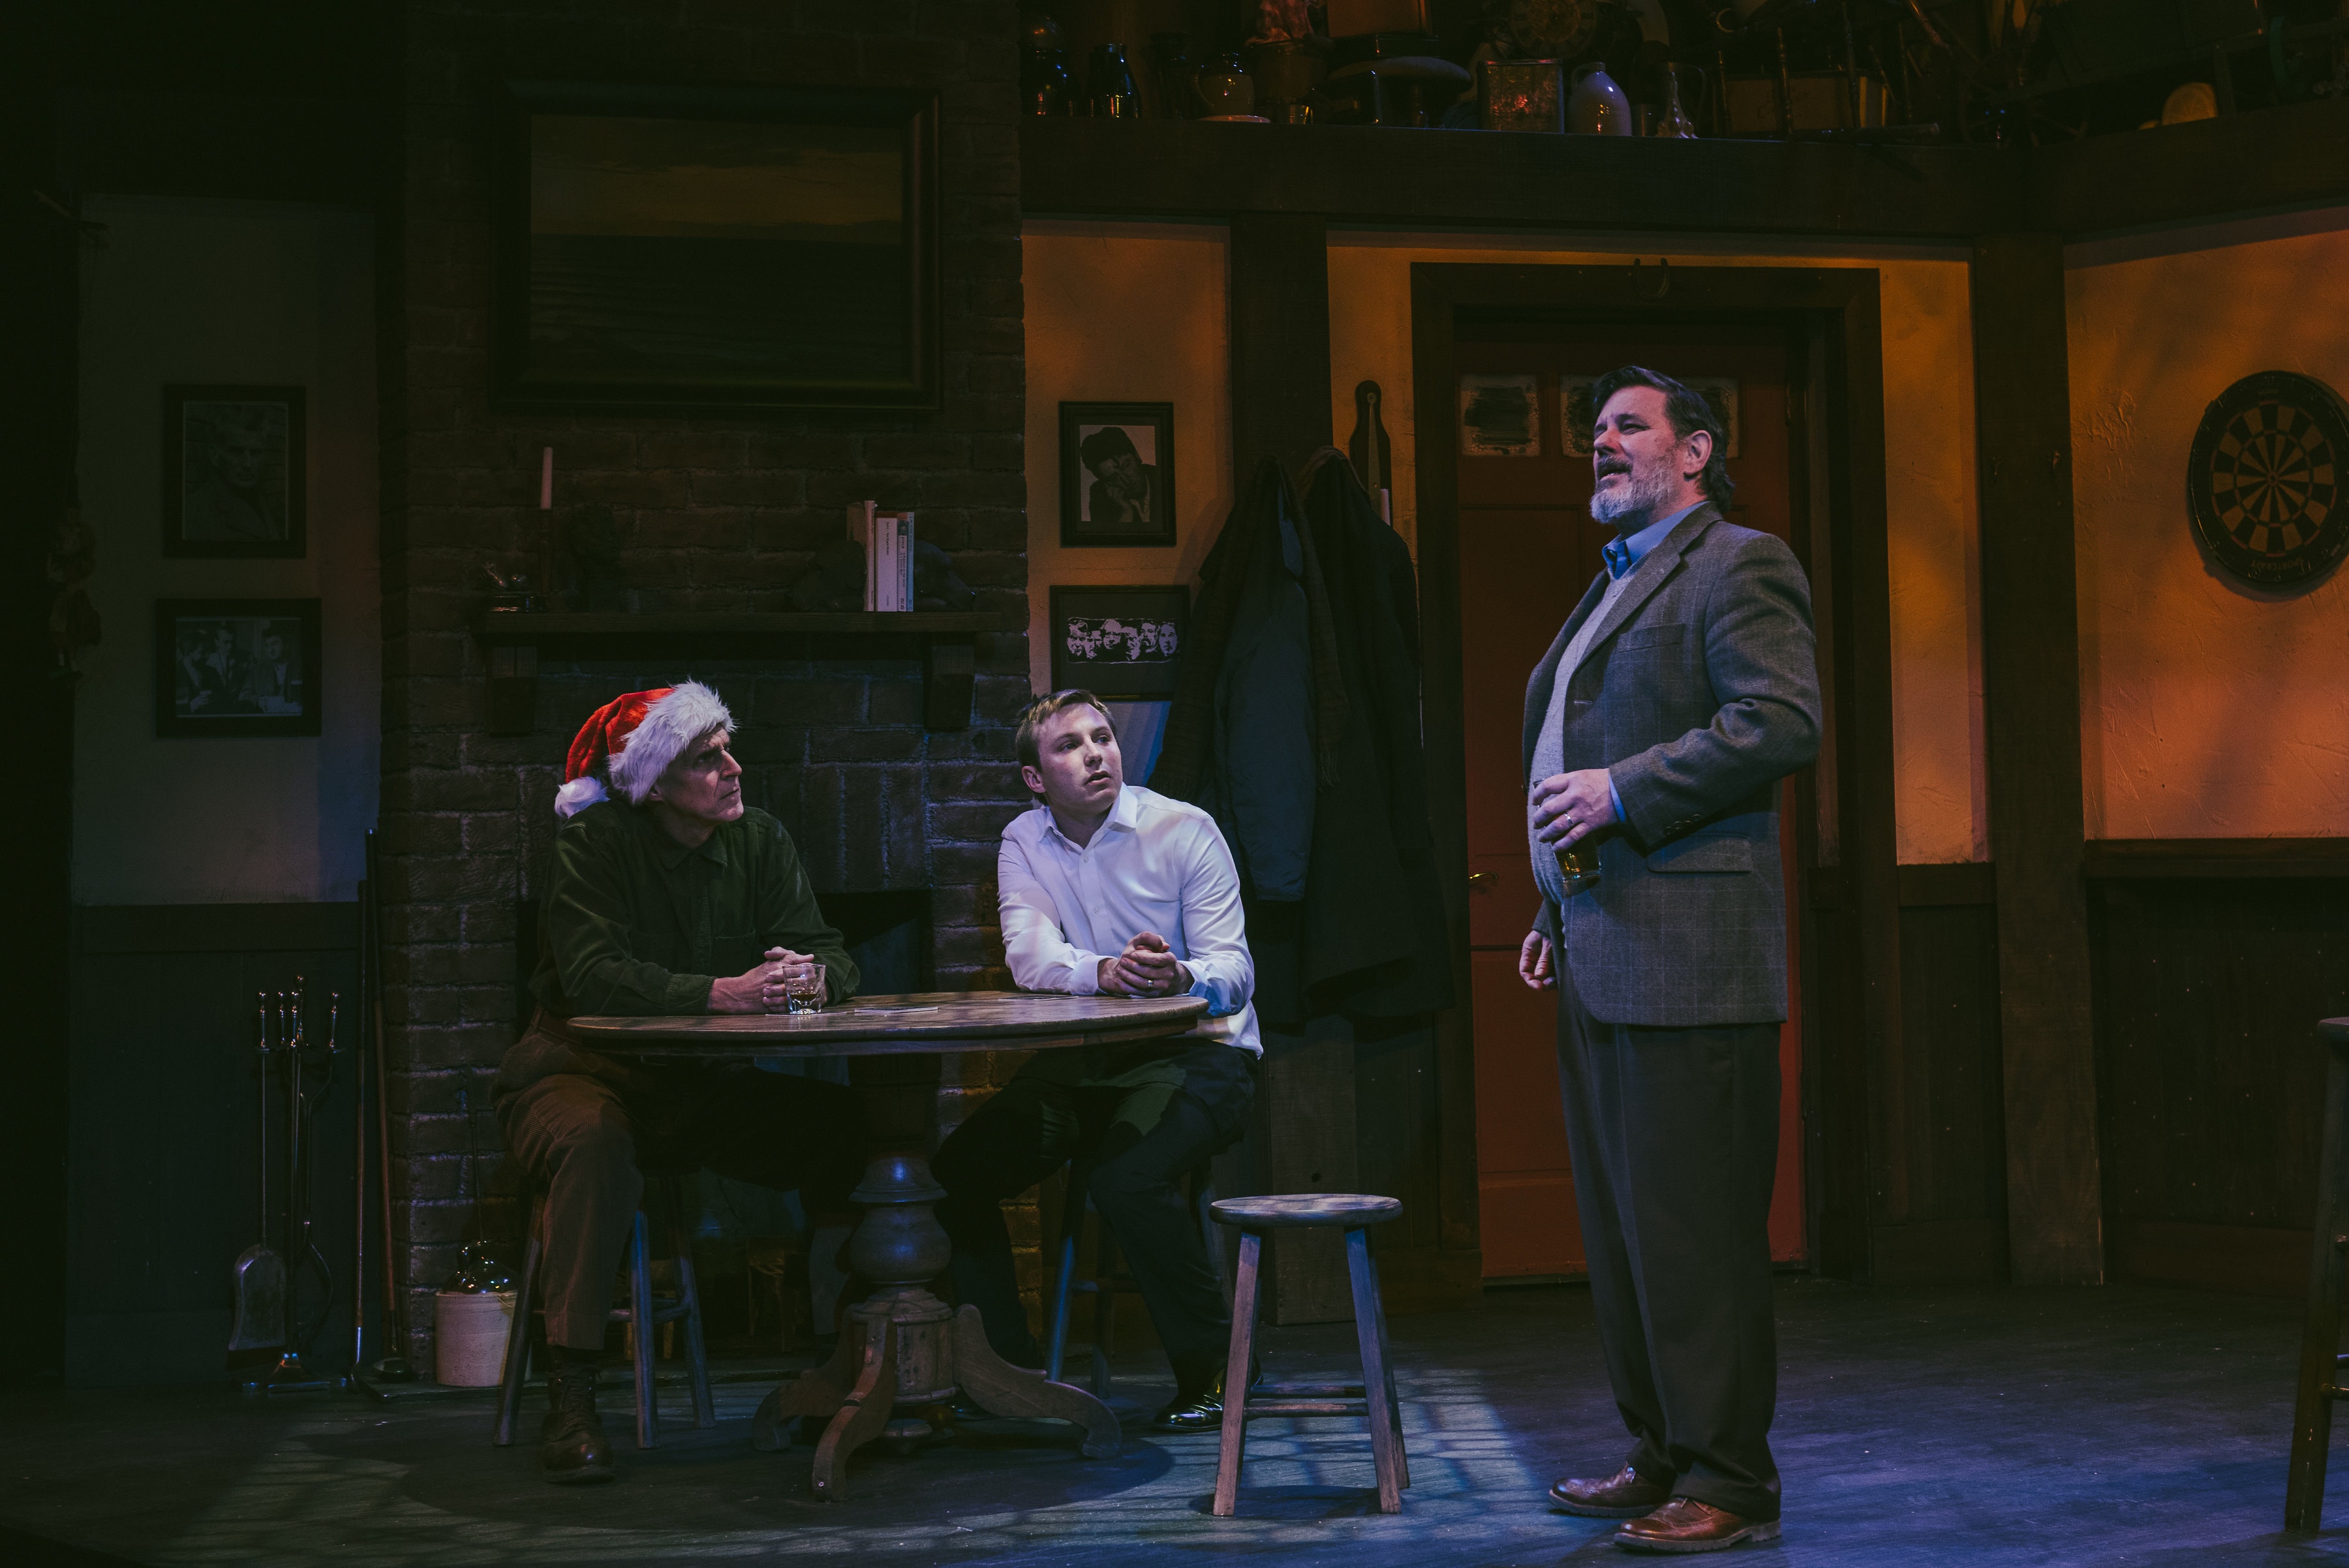 Matthew Keenan's An Irish Carol plays through December 31 at the Keegan Theatre. Photo by Mike Kozemchak.